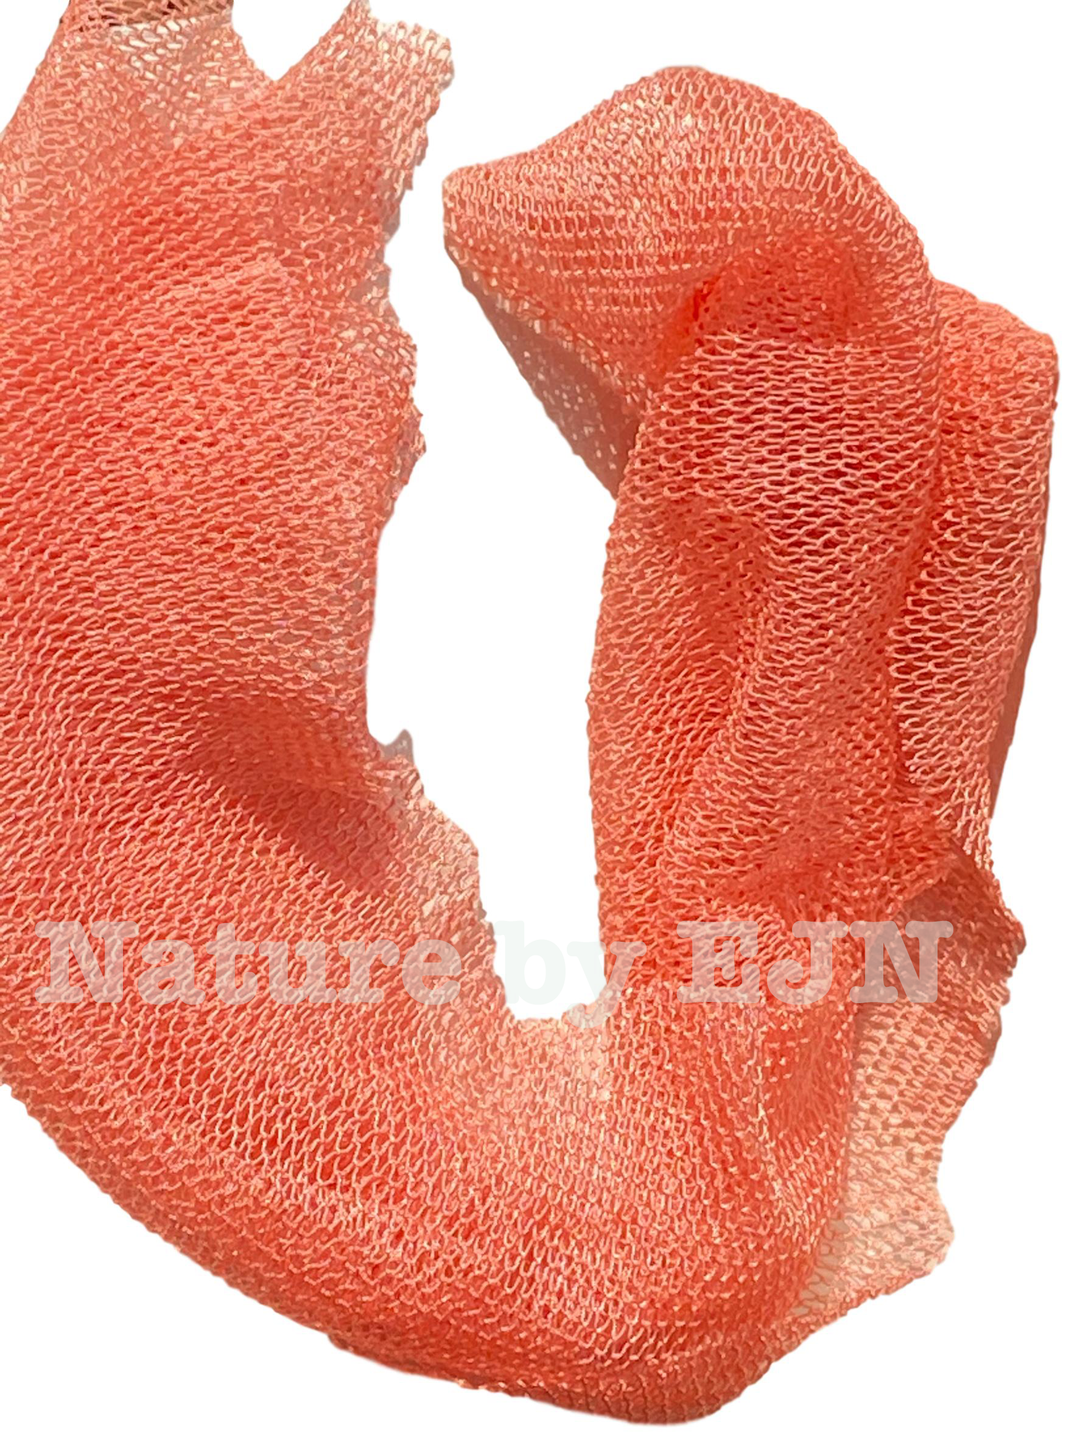 Nature by EJN - Net Bath Sponge, Long, Skin Exfoliation, African, Porous (49", Peach)